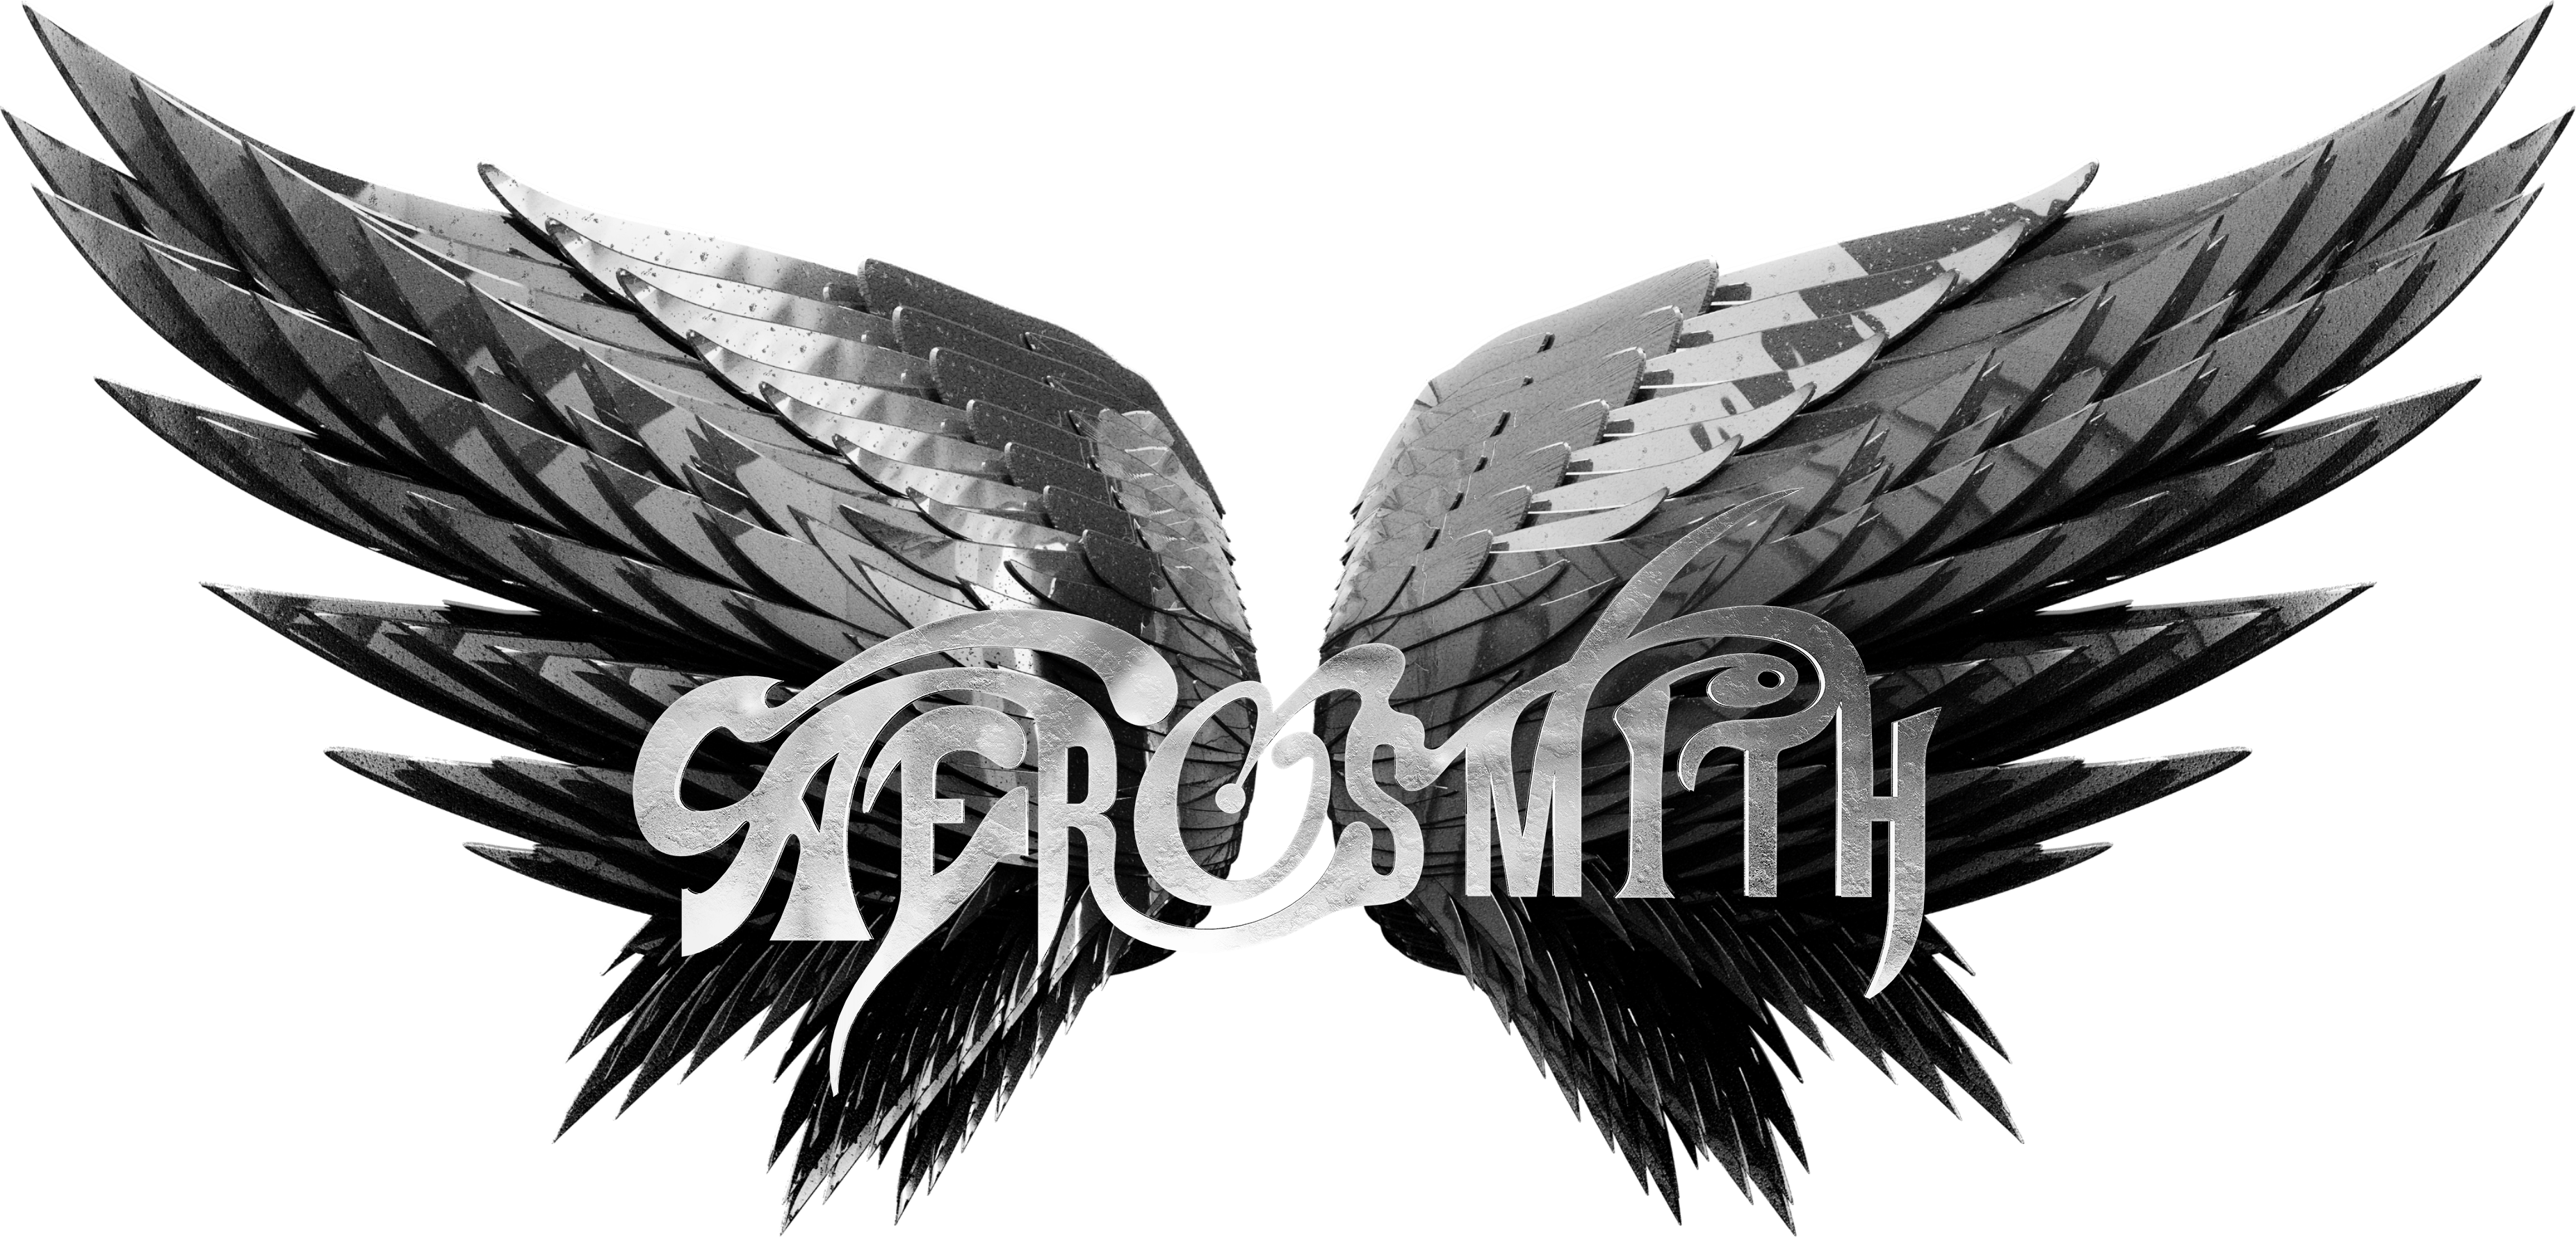 Aerosmith Original Logo - Aerosmith Official Online store. Aerosmith Official Store